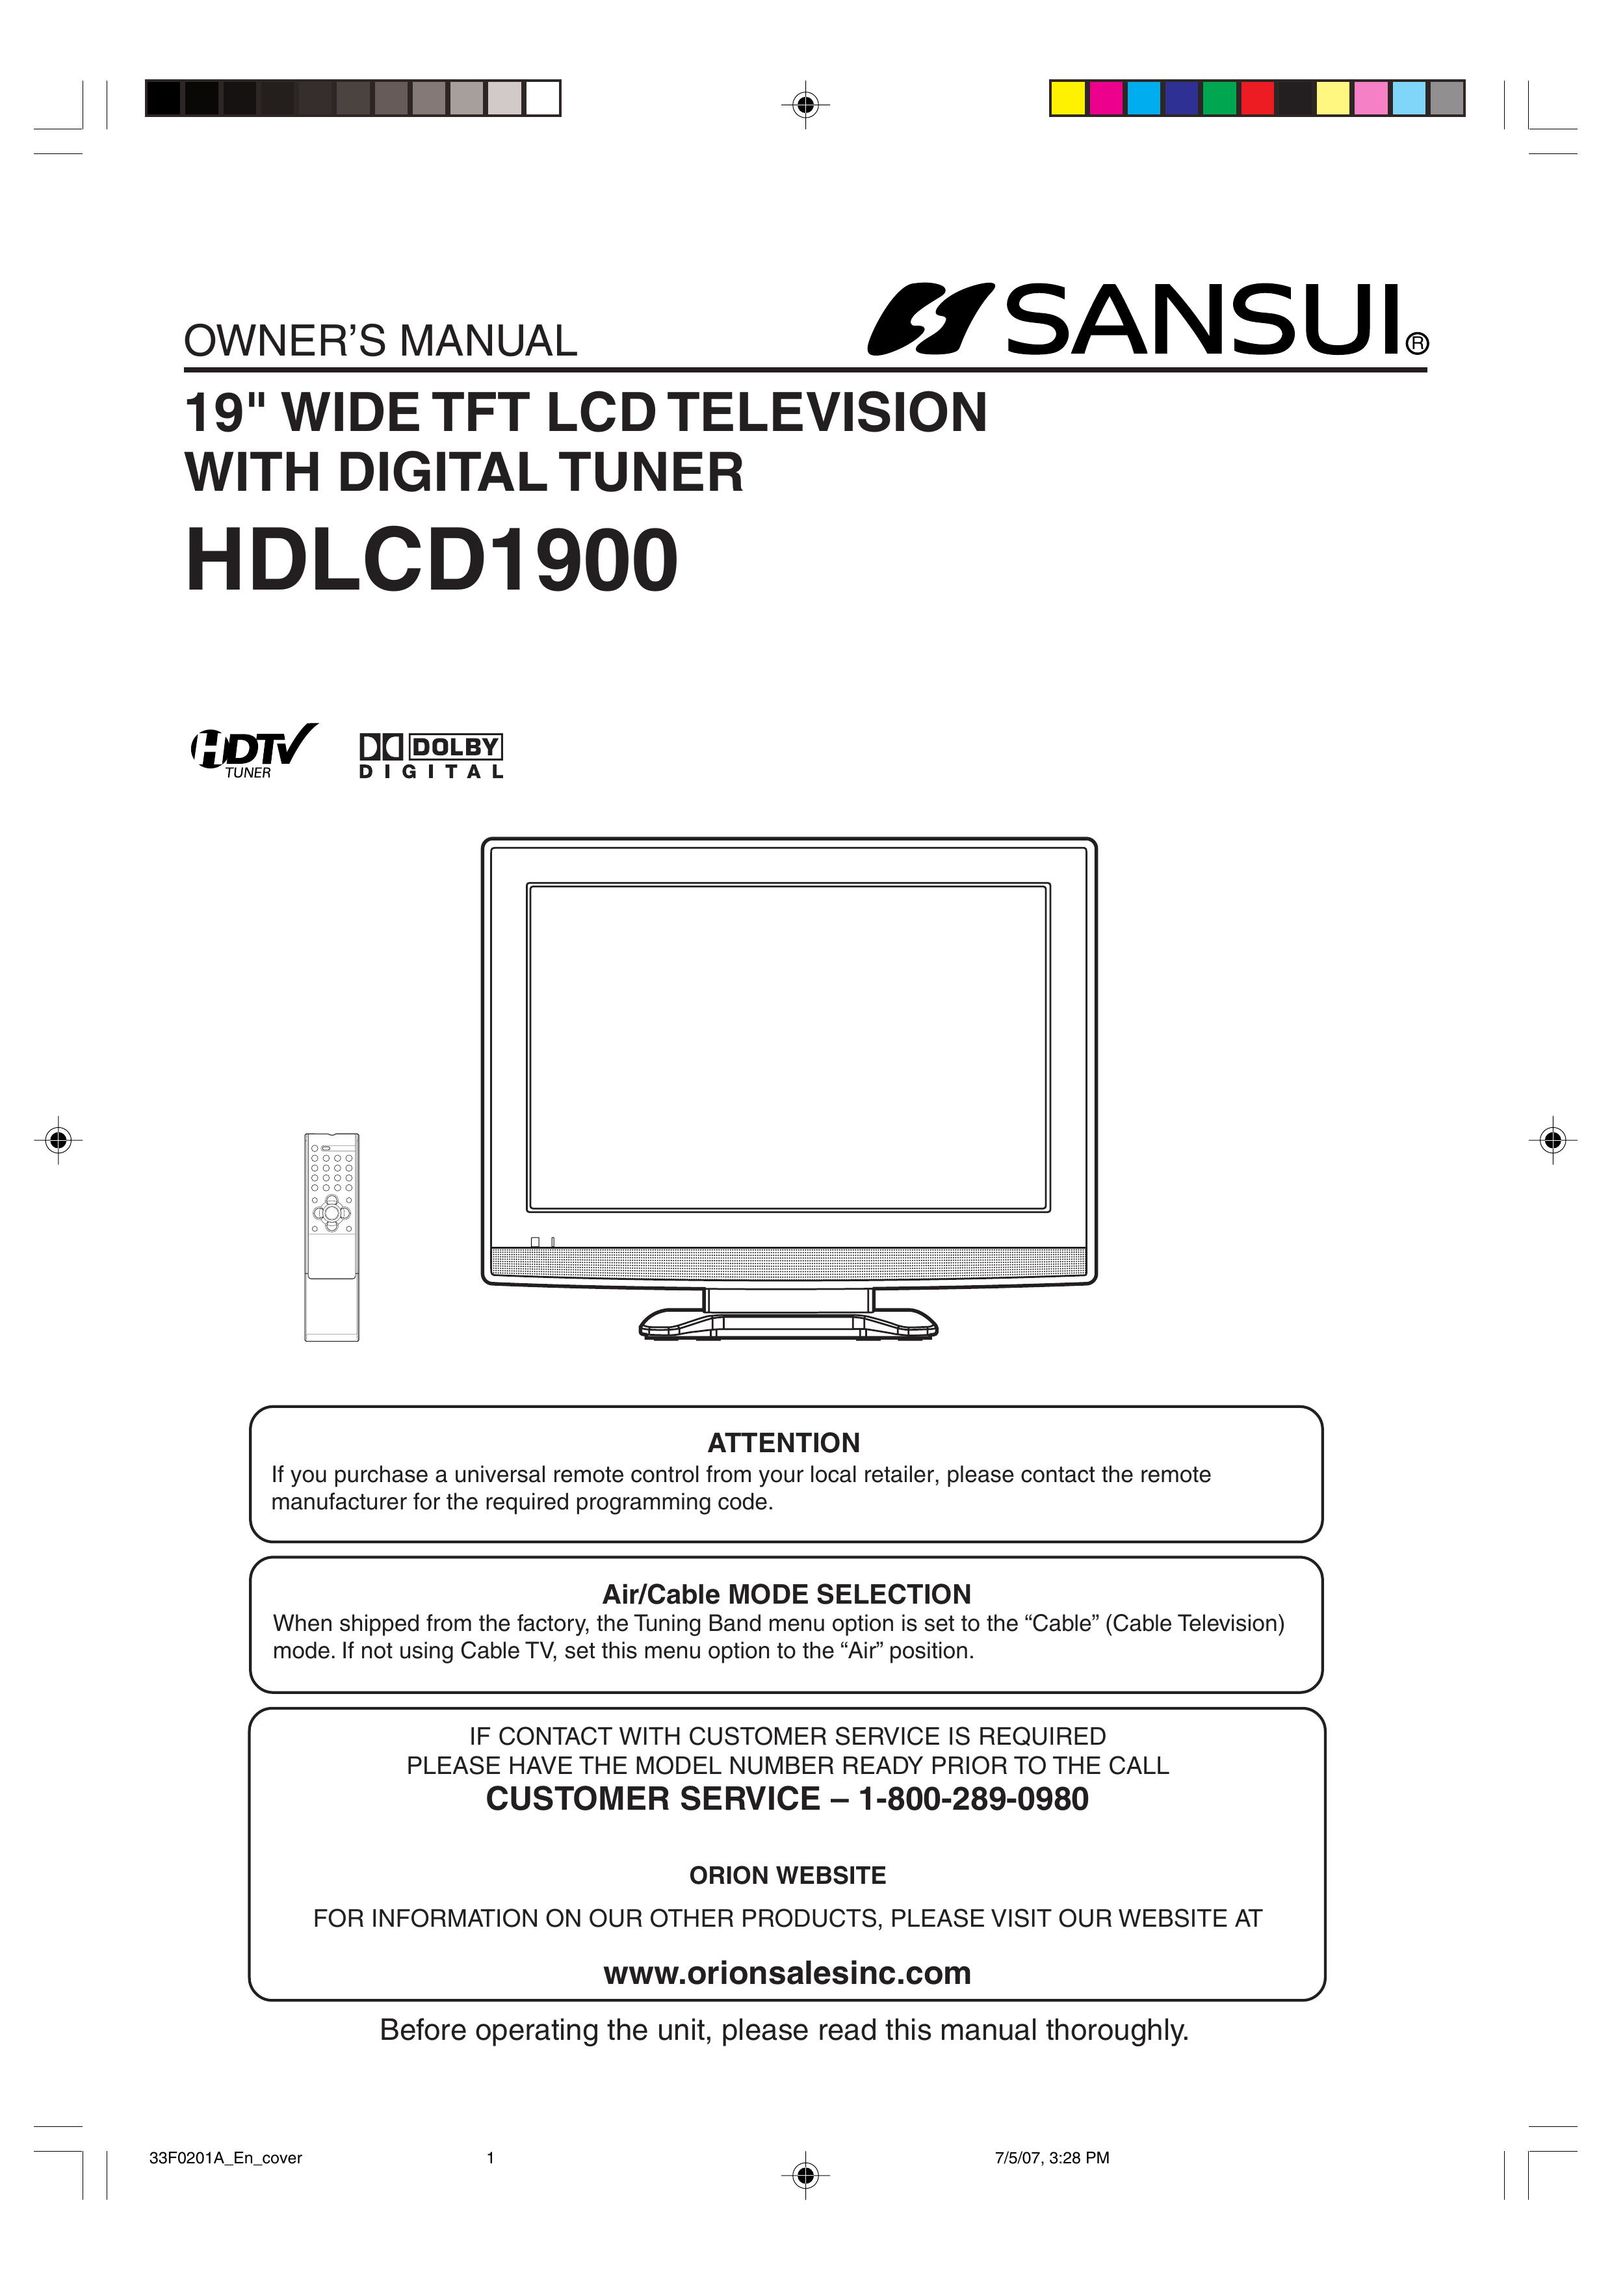 Sansui HDLCD1900 Flat Panel Television User Manual